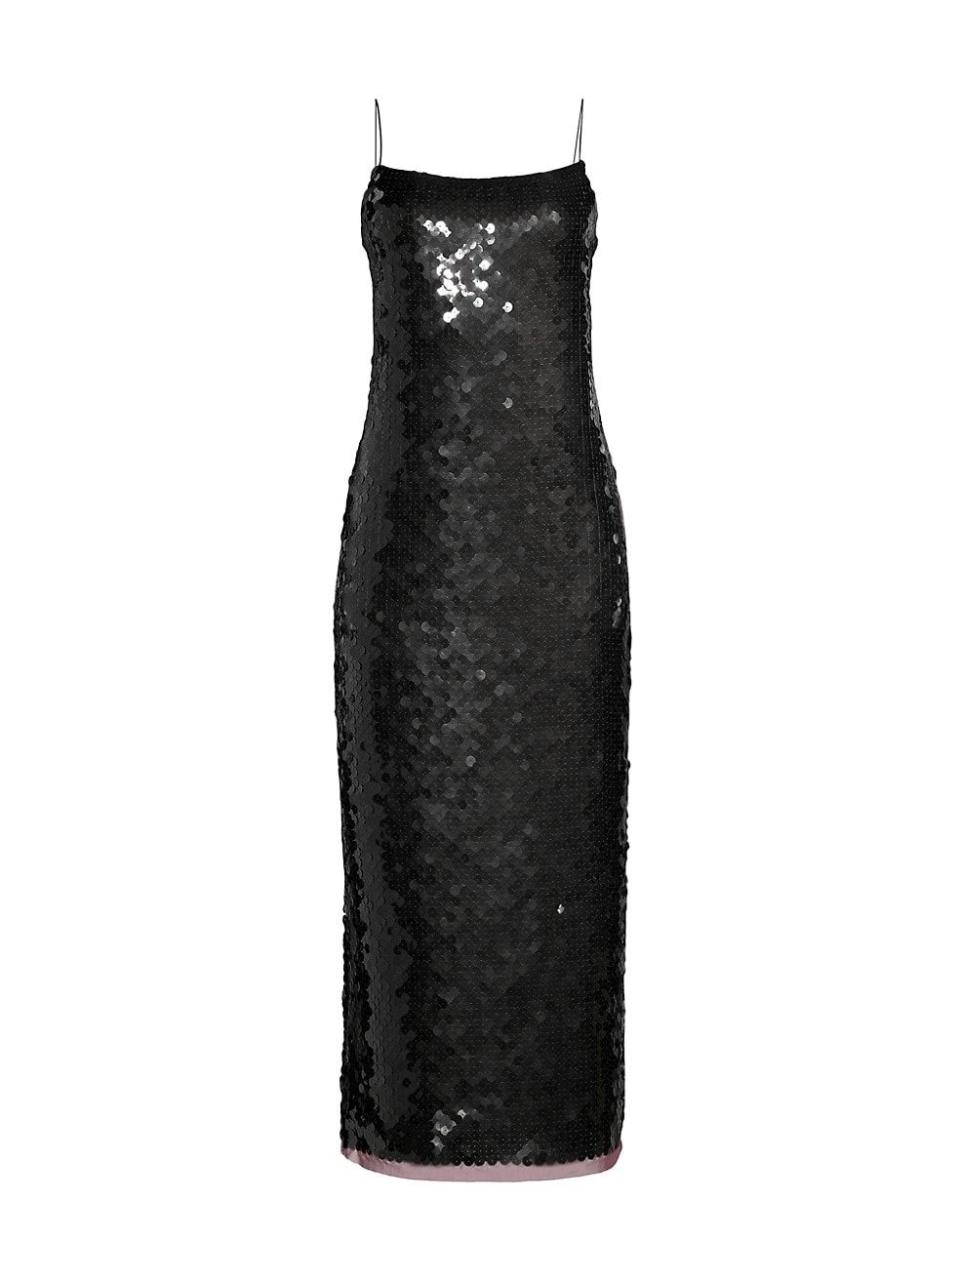 14) Sequin Slip Dress